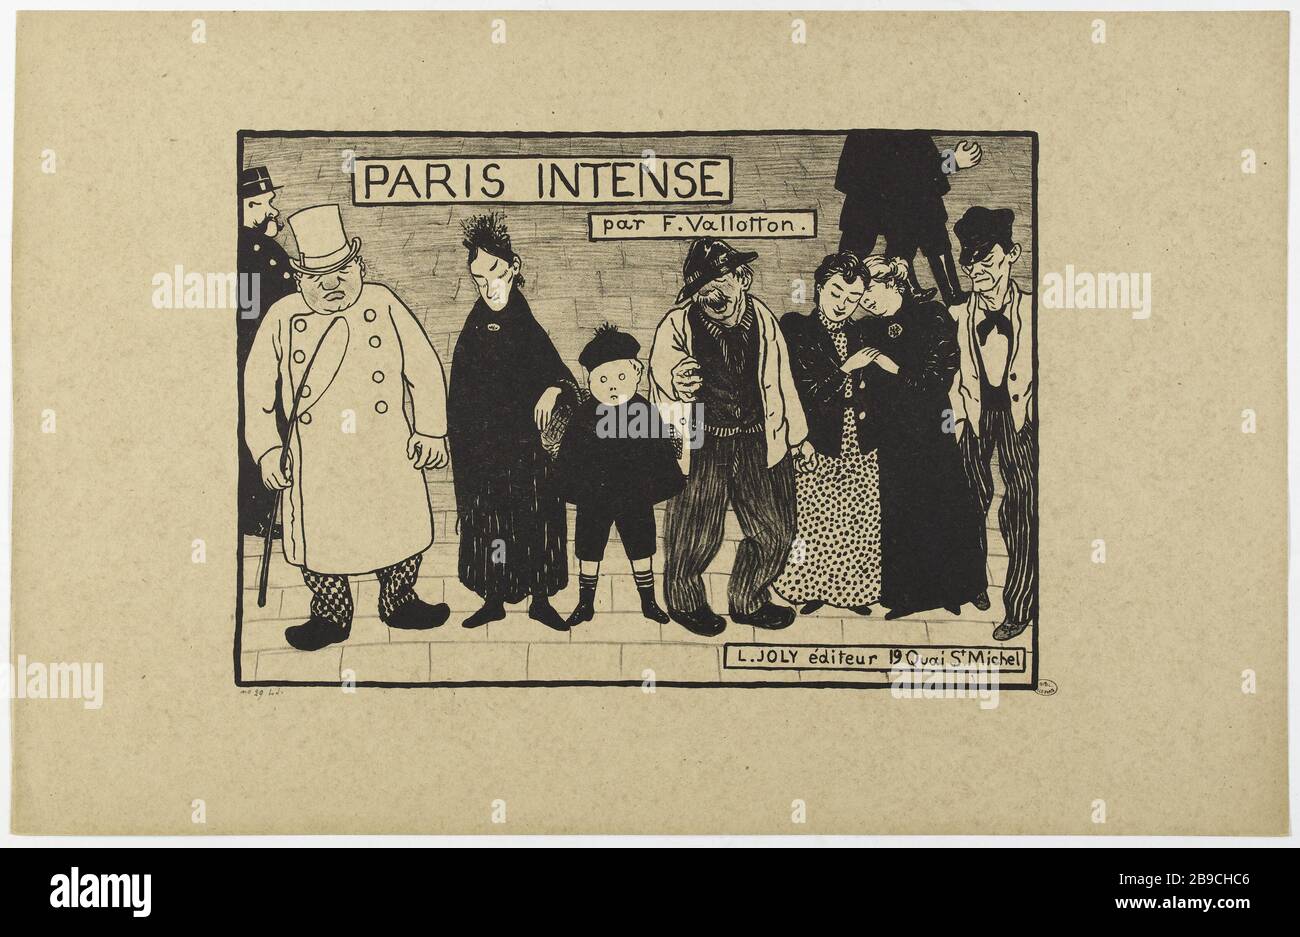 Paris intense. Félix Edouard Vallotton (1865-1925). 'Paris intense'. Gravure. 1893. Paris, musée Carnavalet. Stock Photo